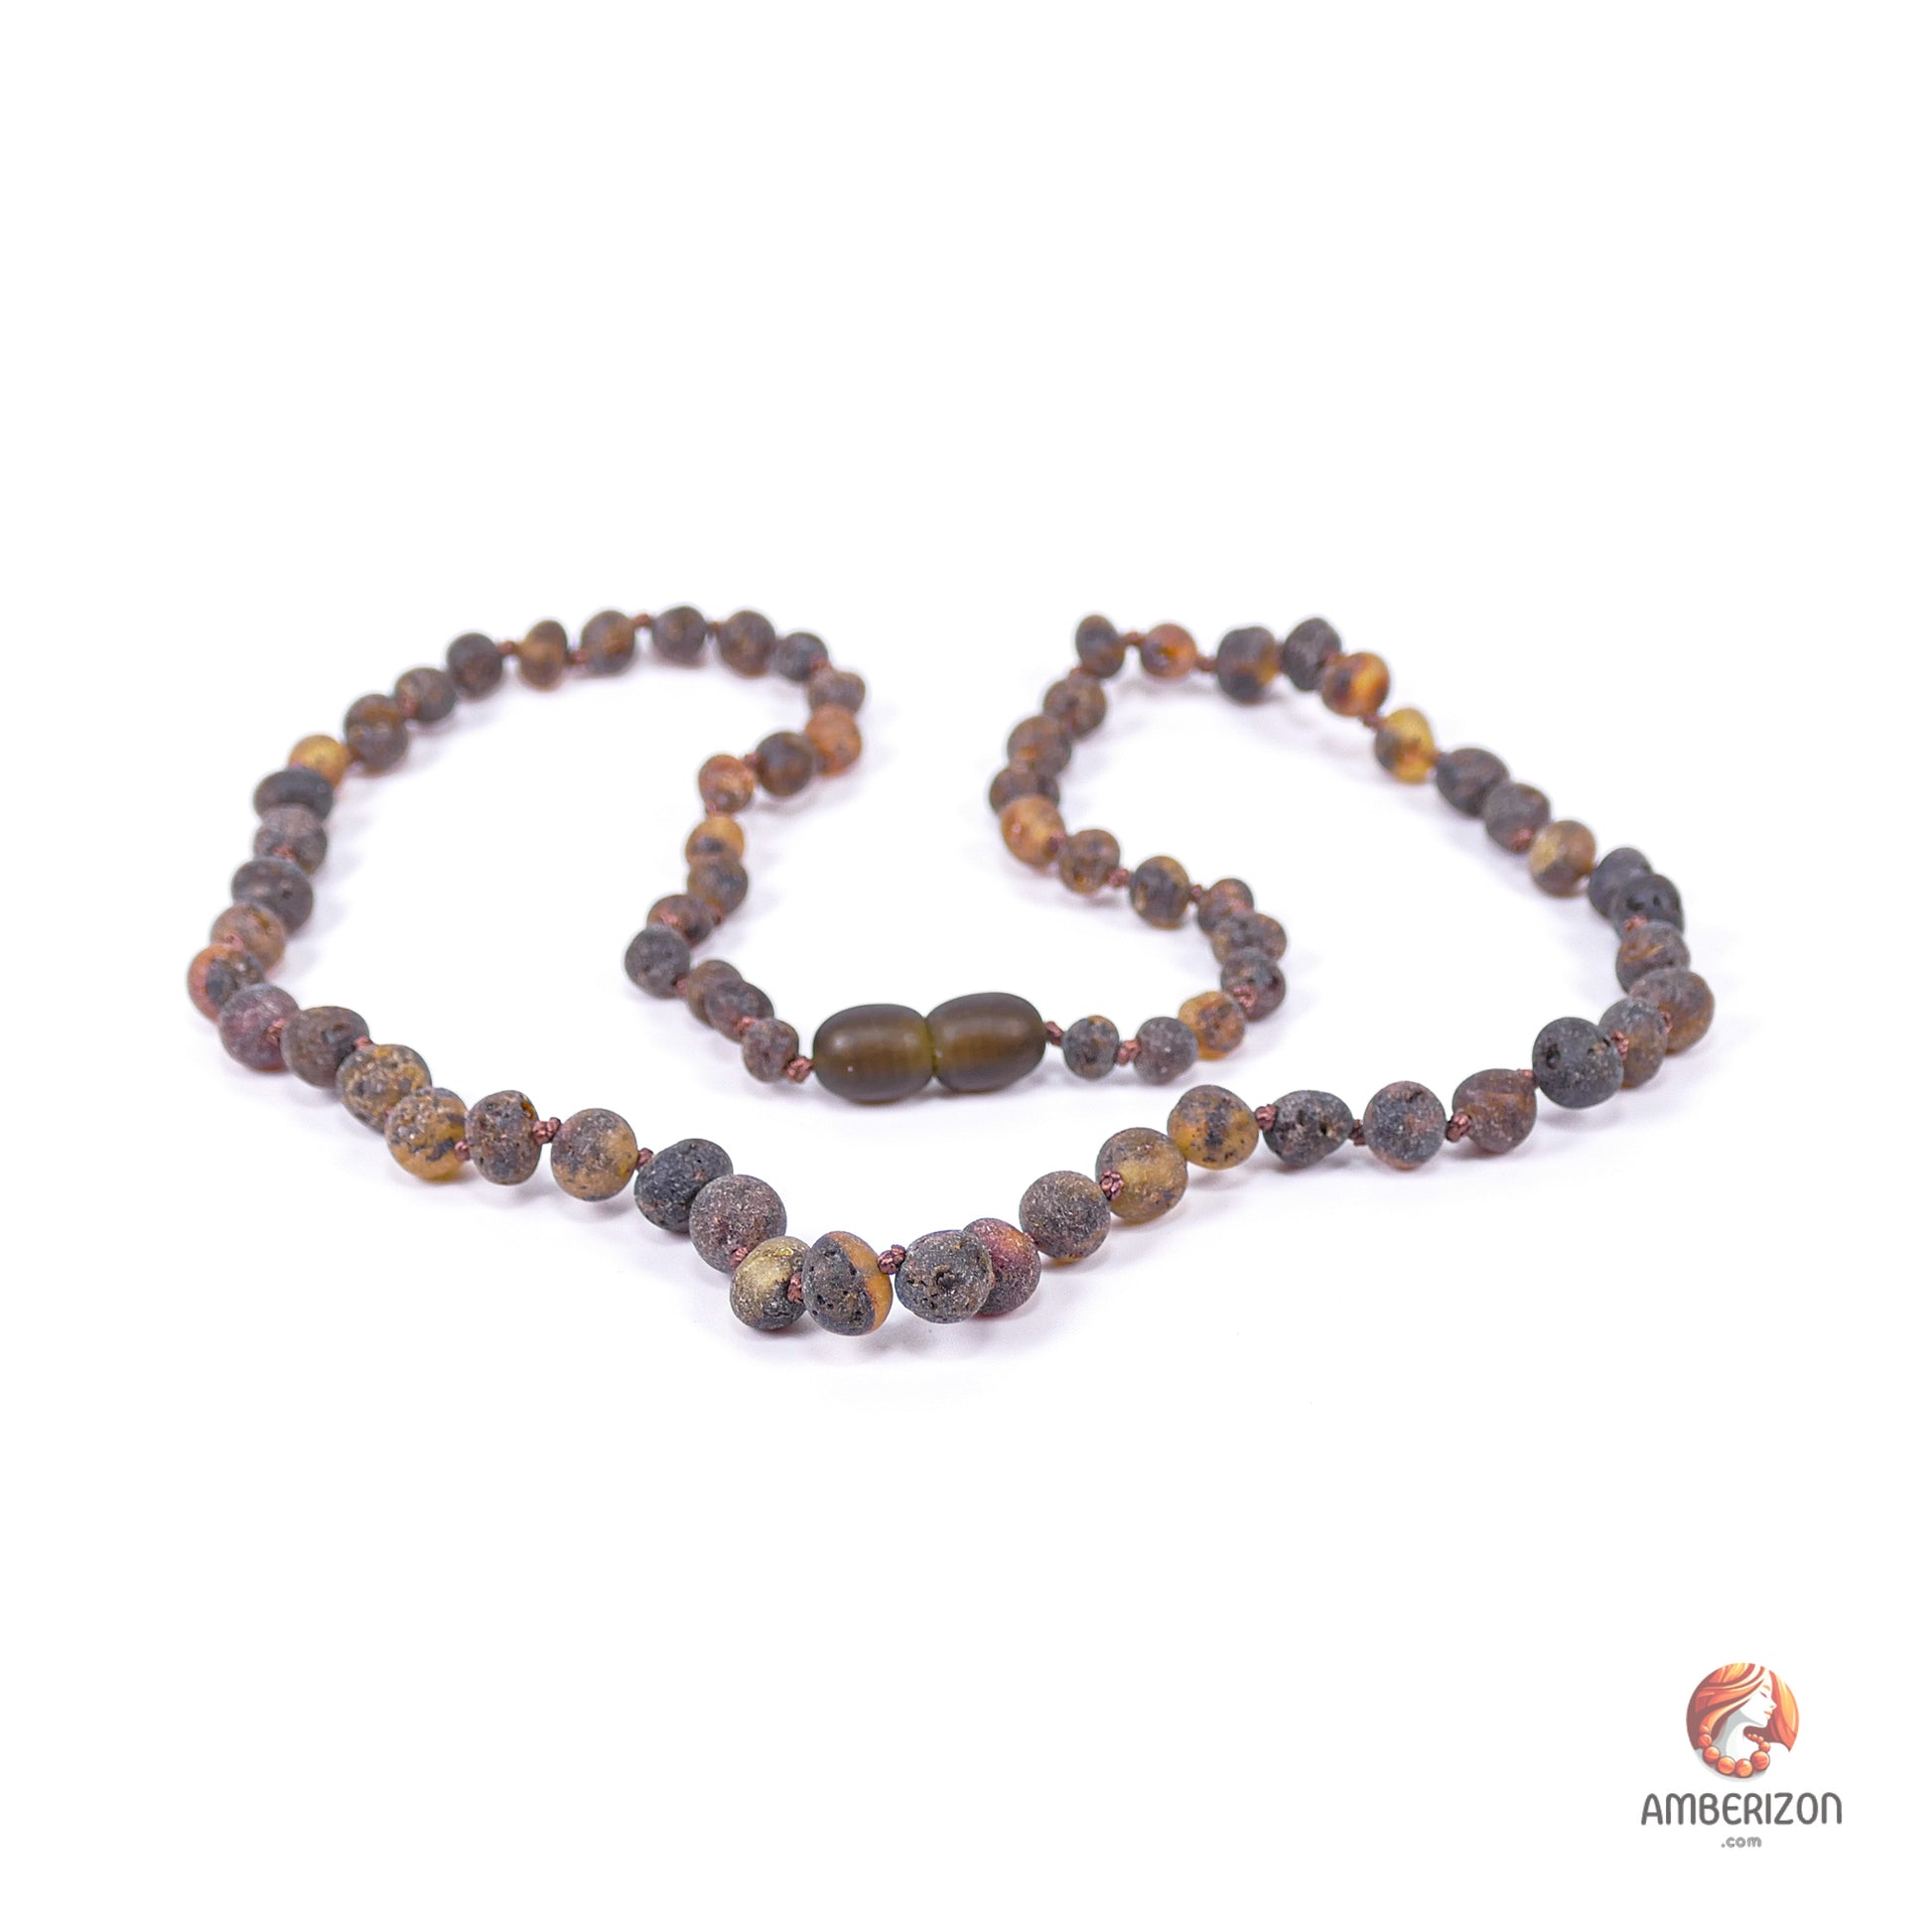 Grey minimalist women's necklace - Raw unpolished Baltic amber beads